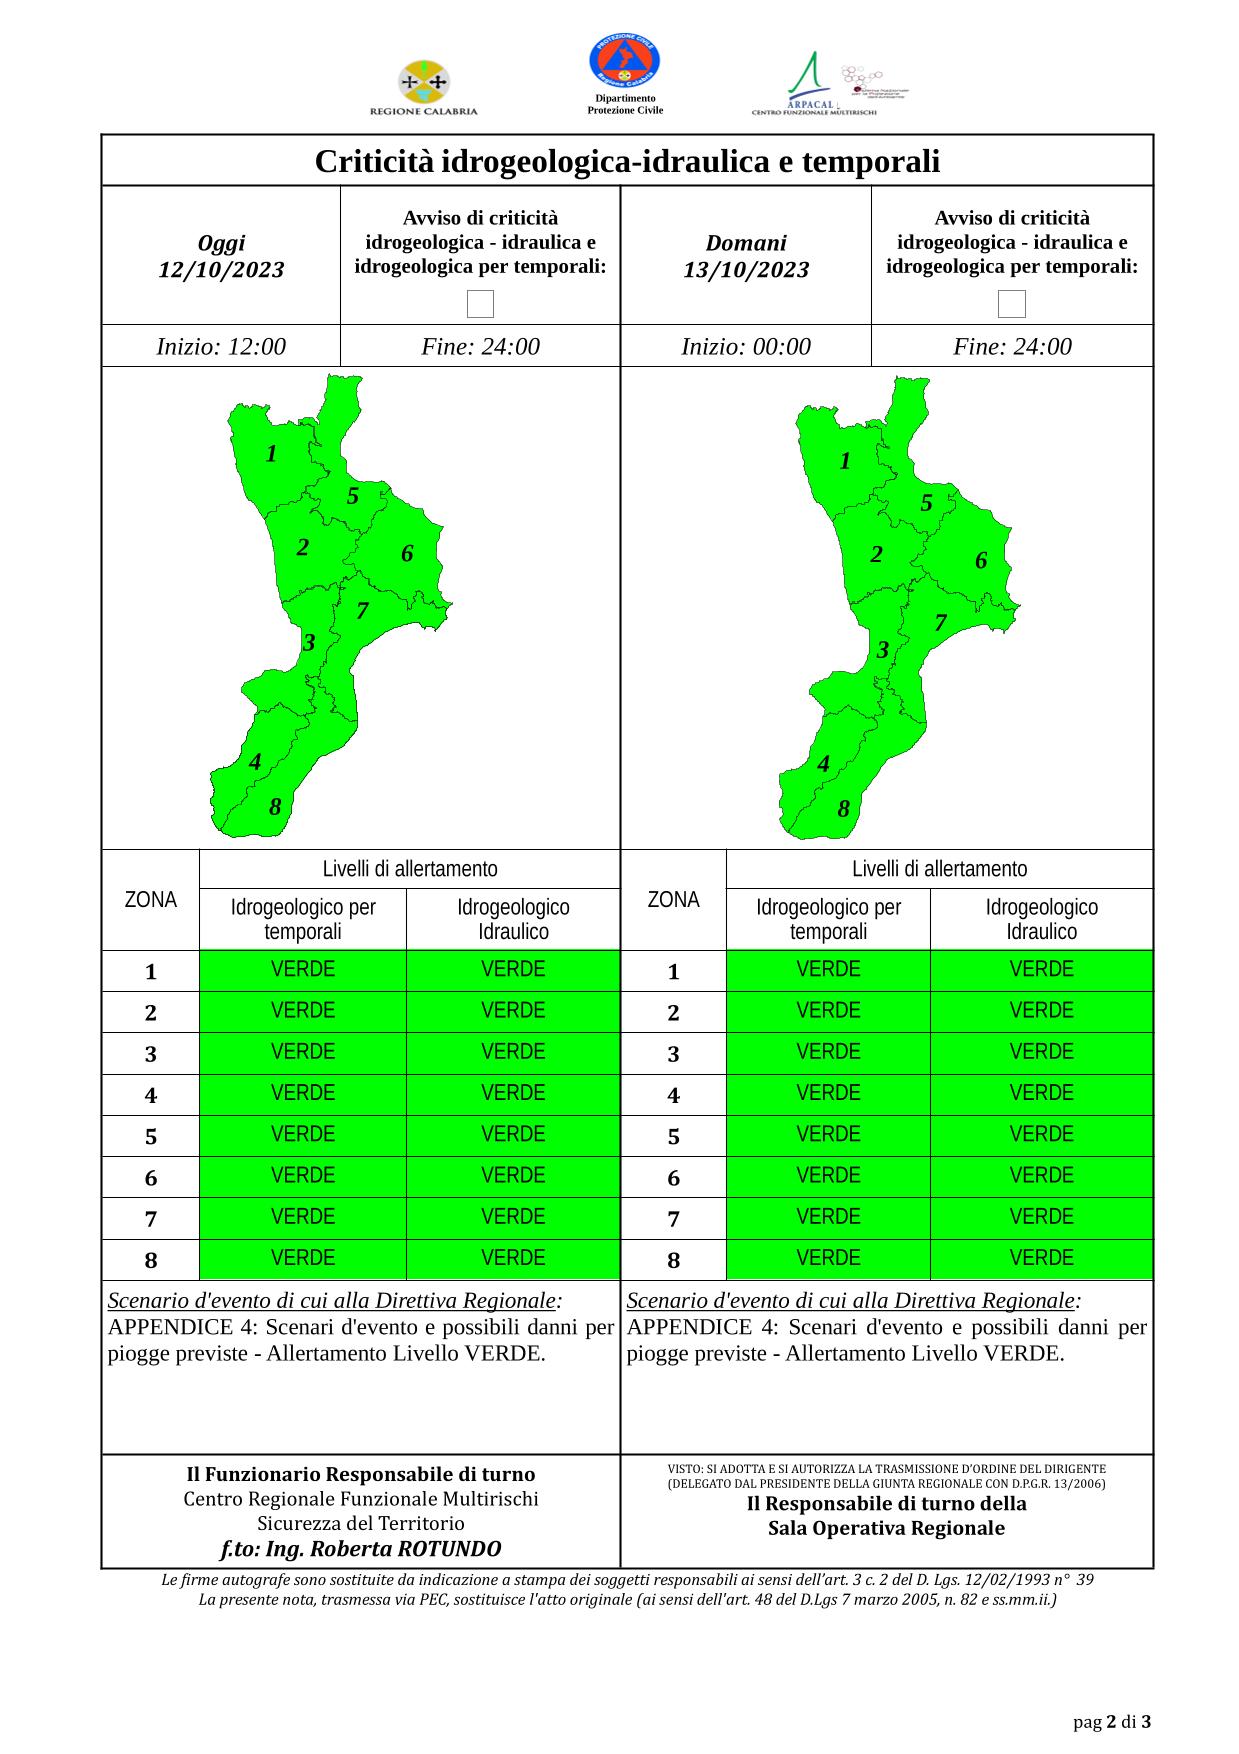 Criticità idrogeologica-idraulica e temporali in Calabria 12-10-2023